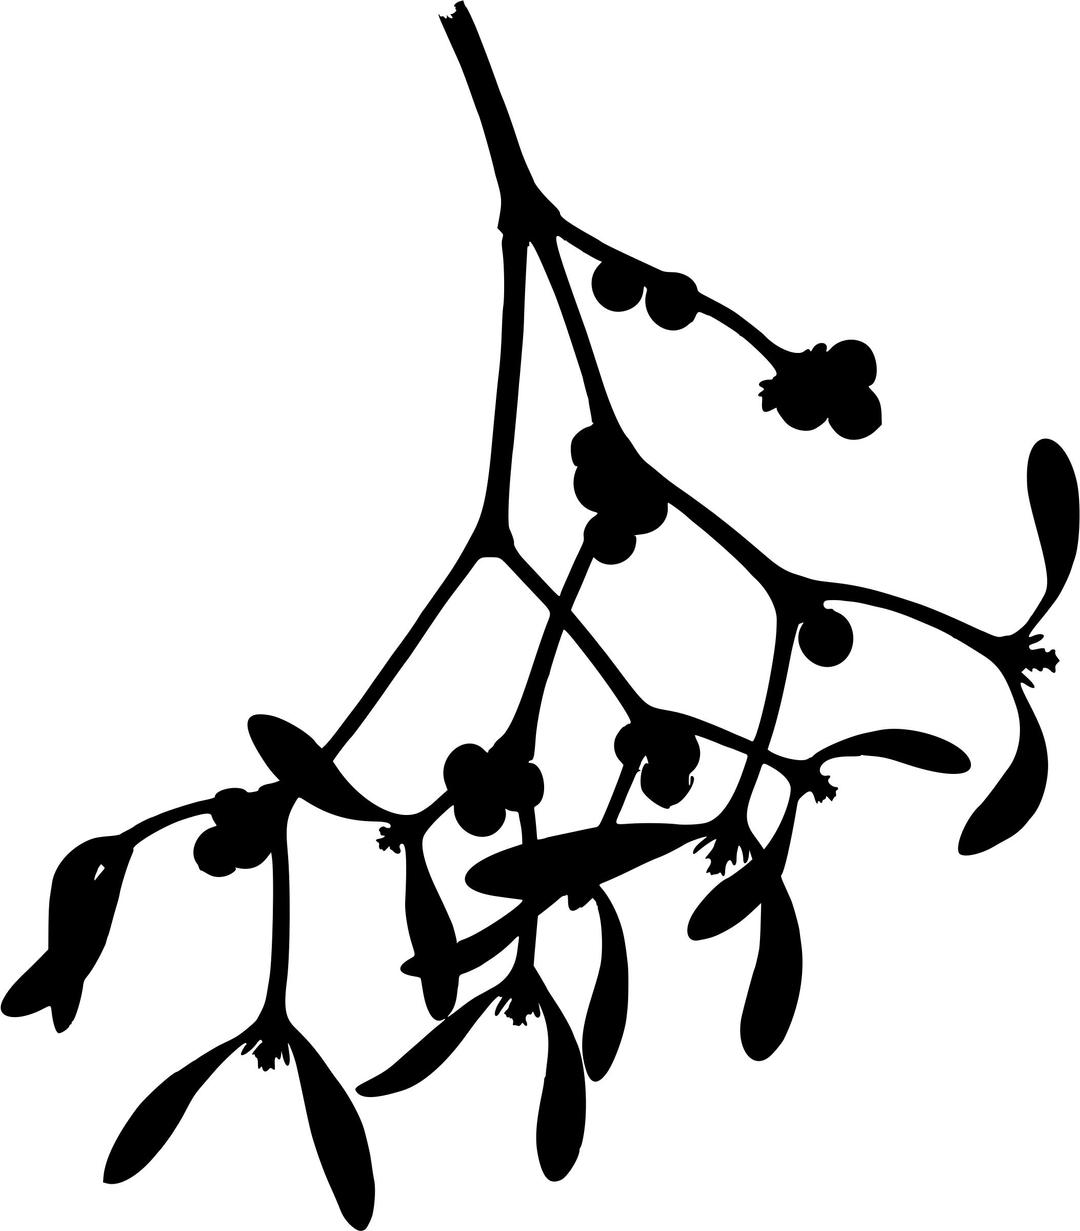 Mistletoe silhouette png transparent